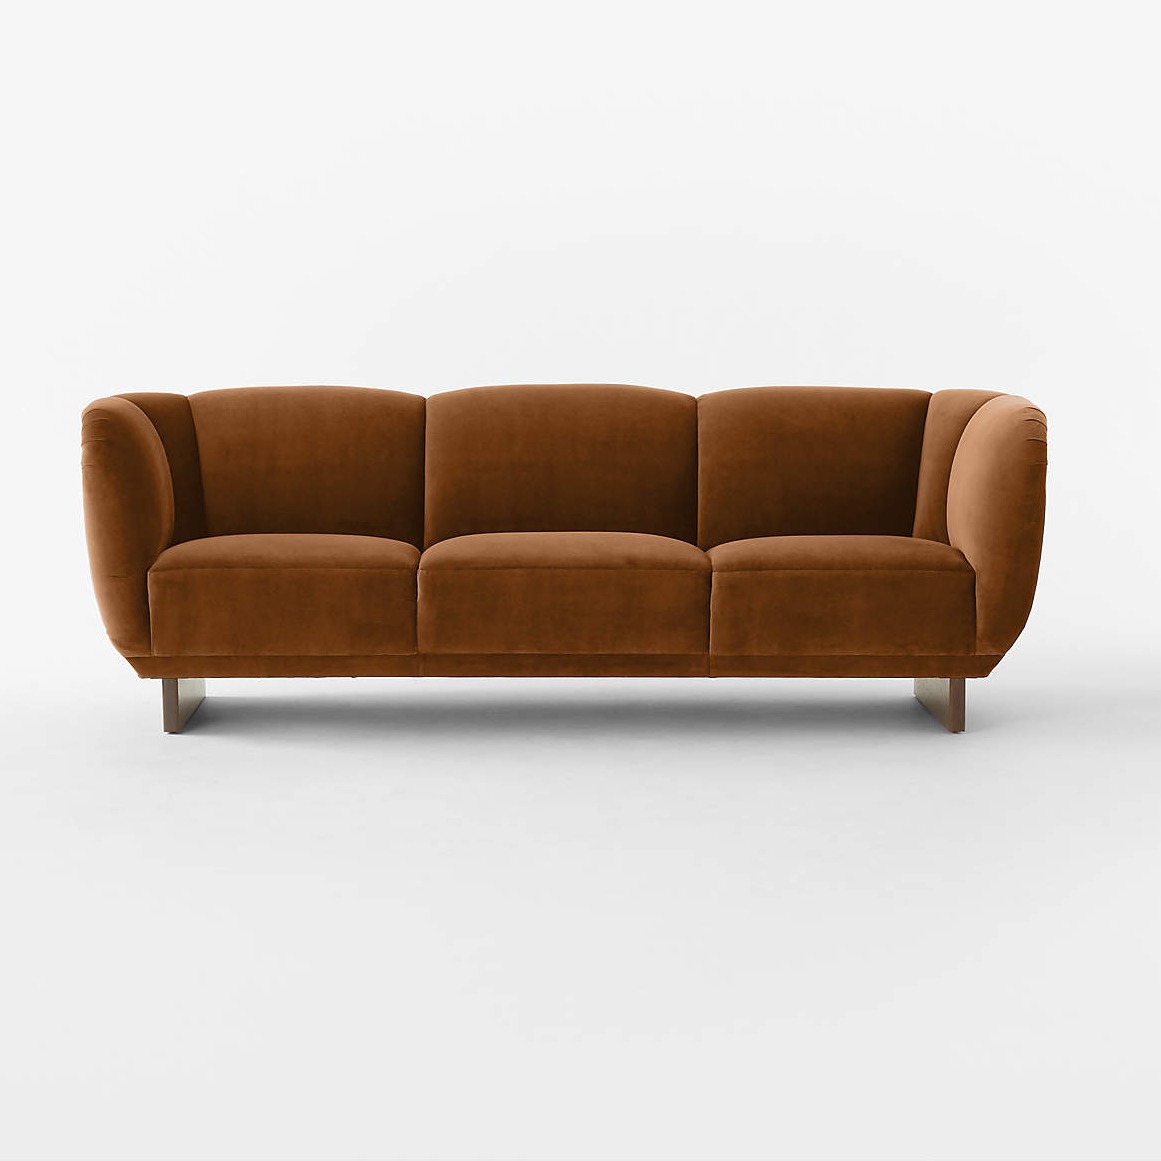  Buy Éclair Chintz 3 Seater Fabric Sofa @upto 70% off at ApkaInterior.com